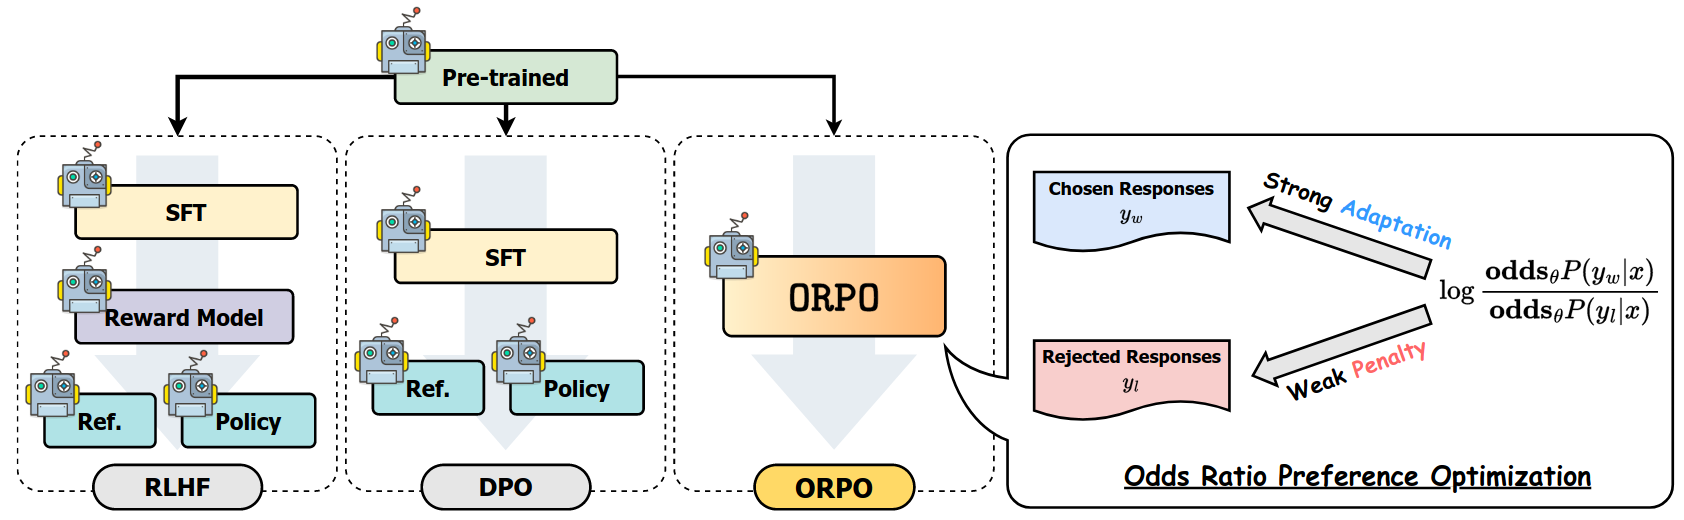 preference_algorithms_ORPO_0.png